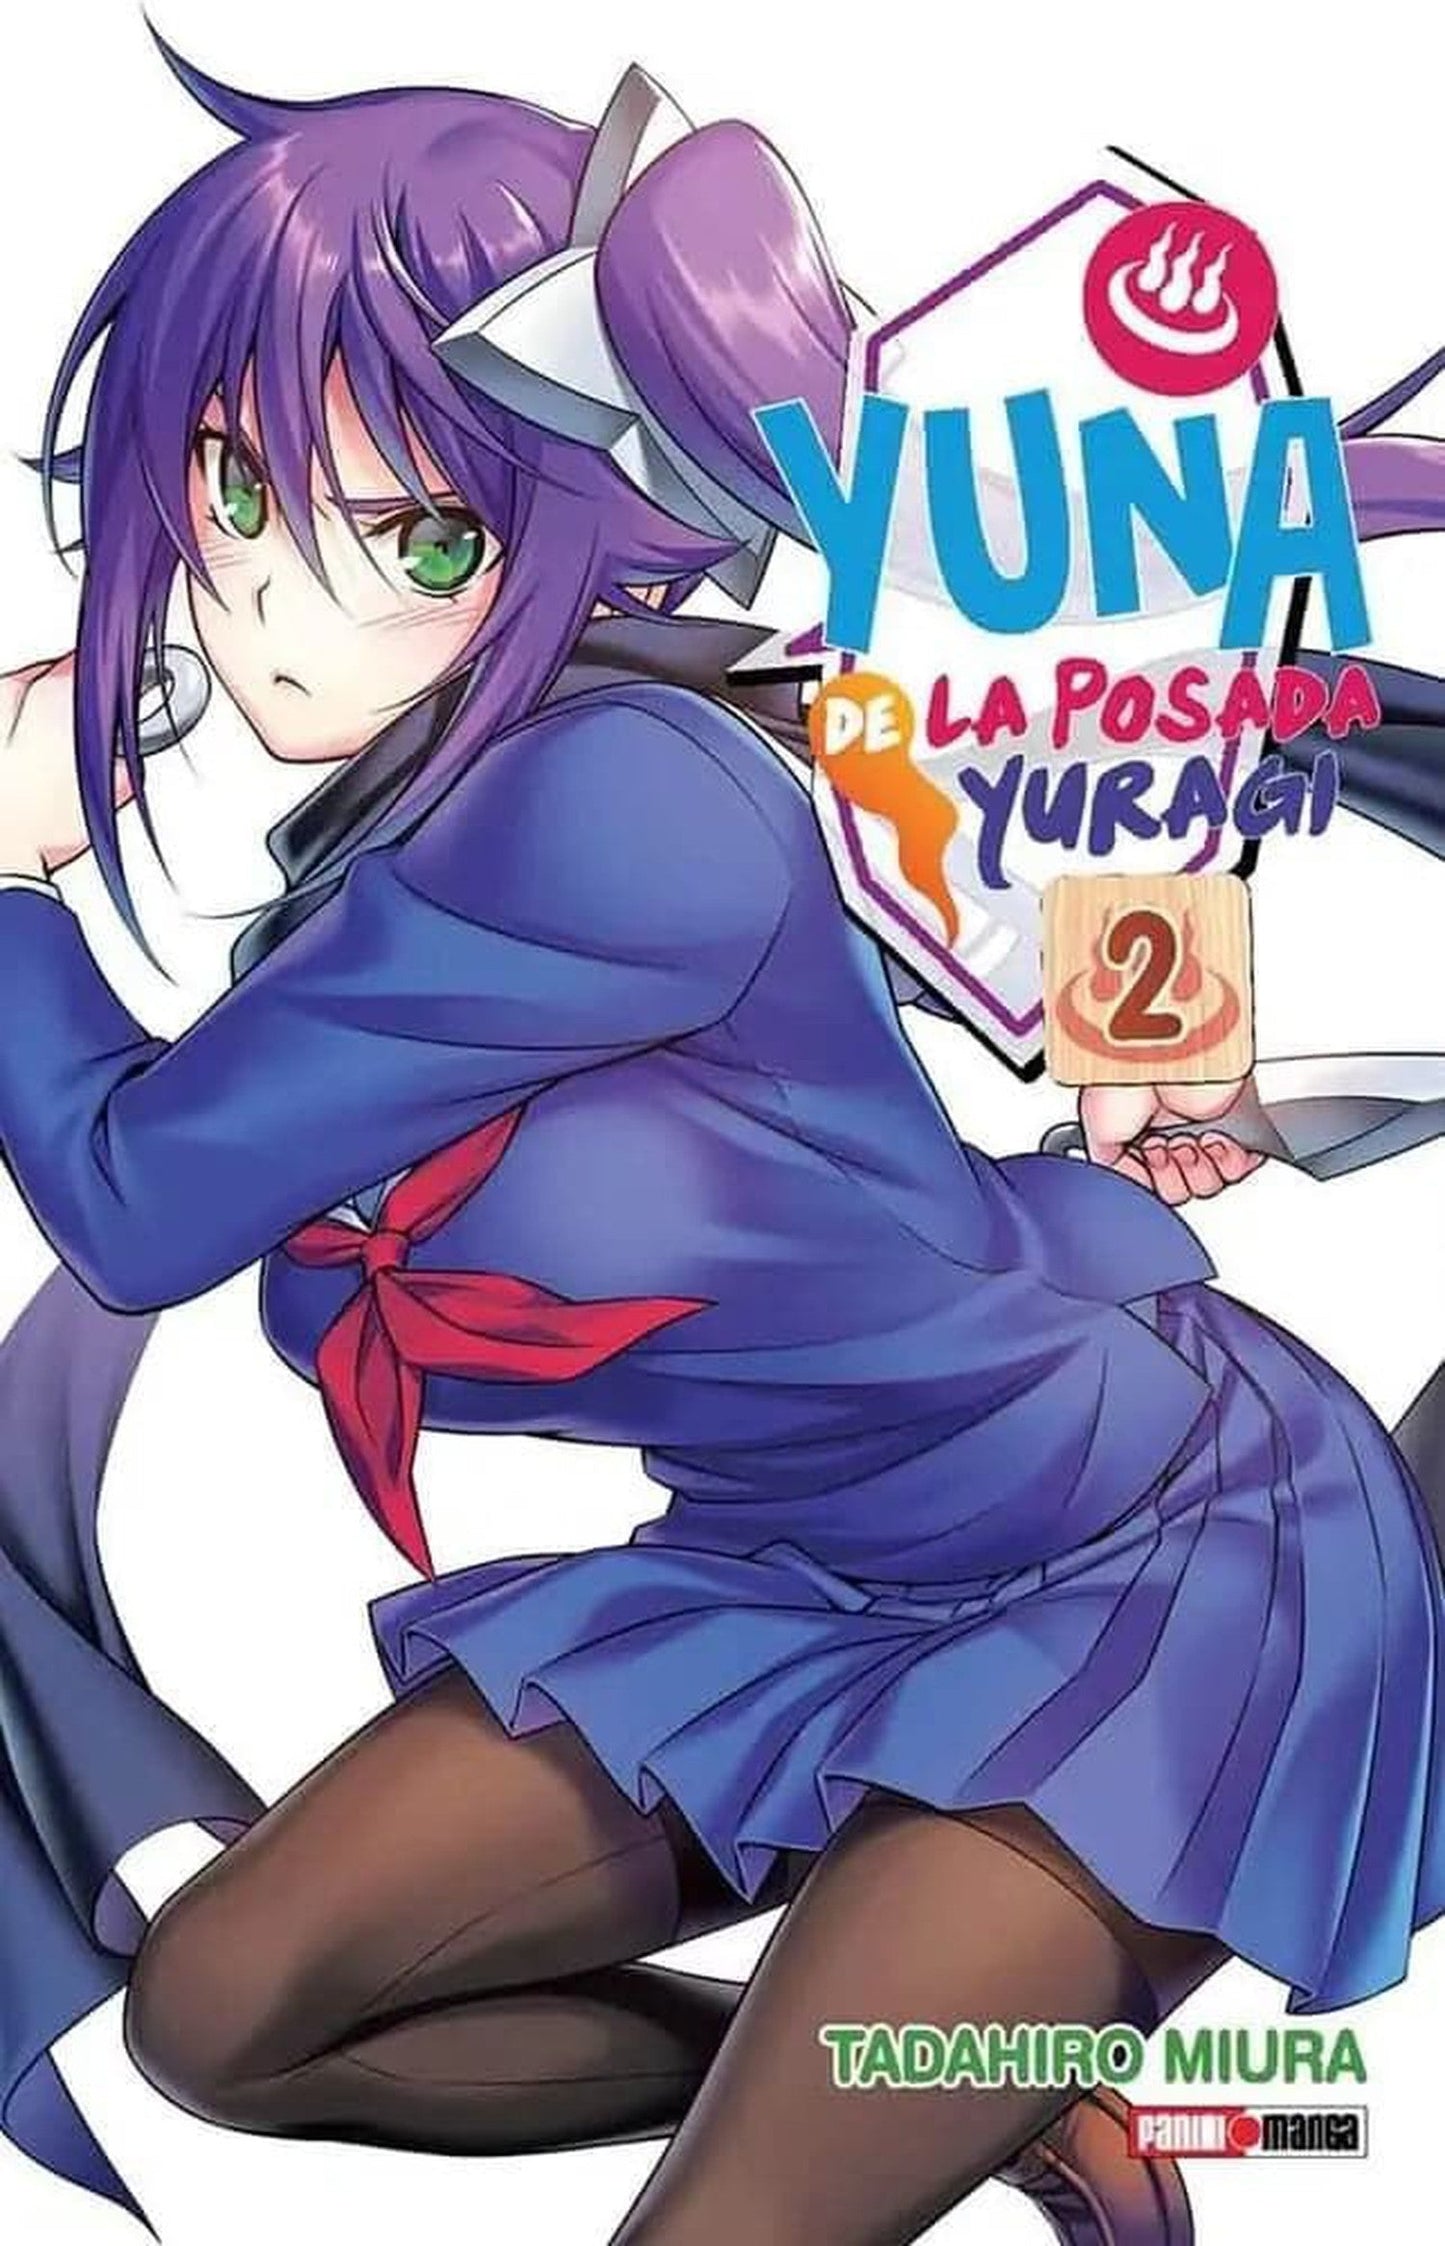 Yuna de la Posada Yuragi #2